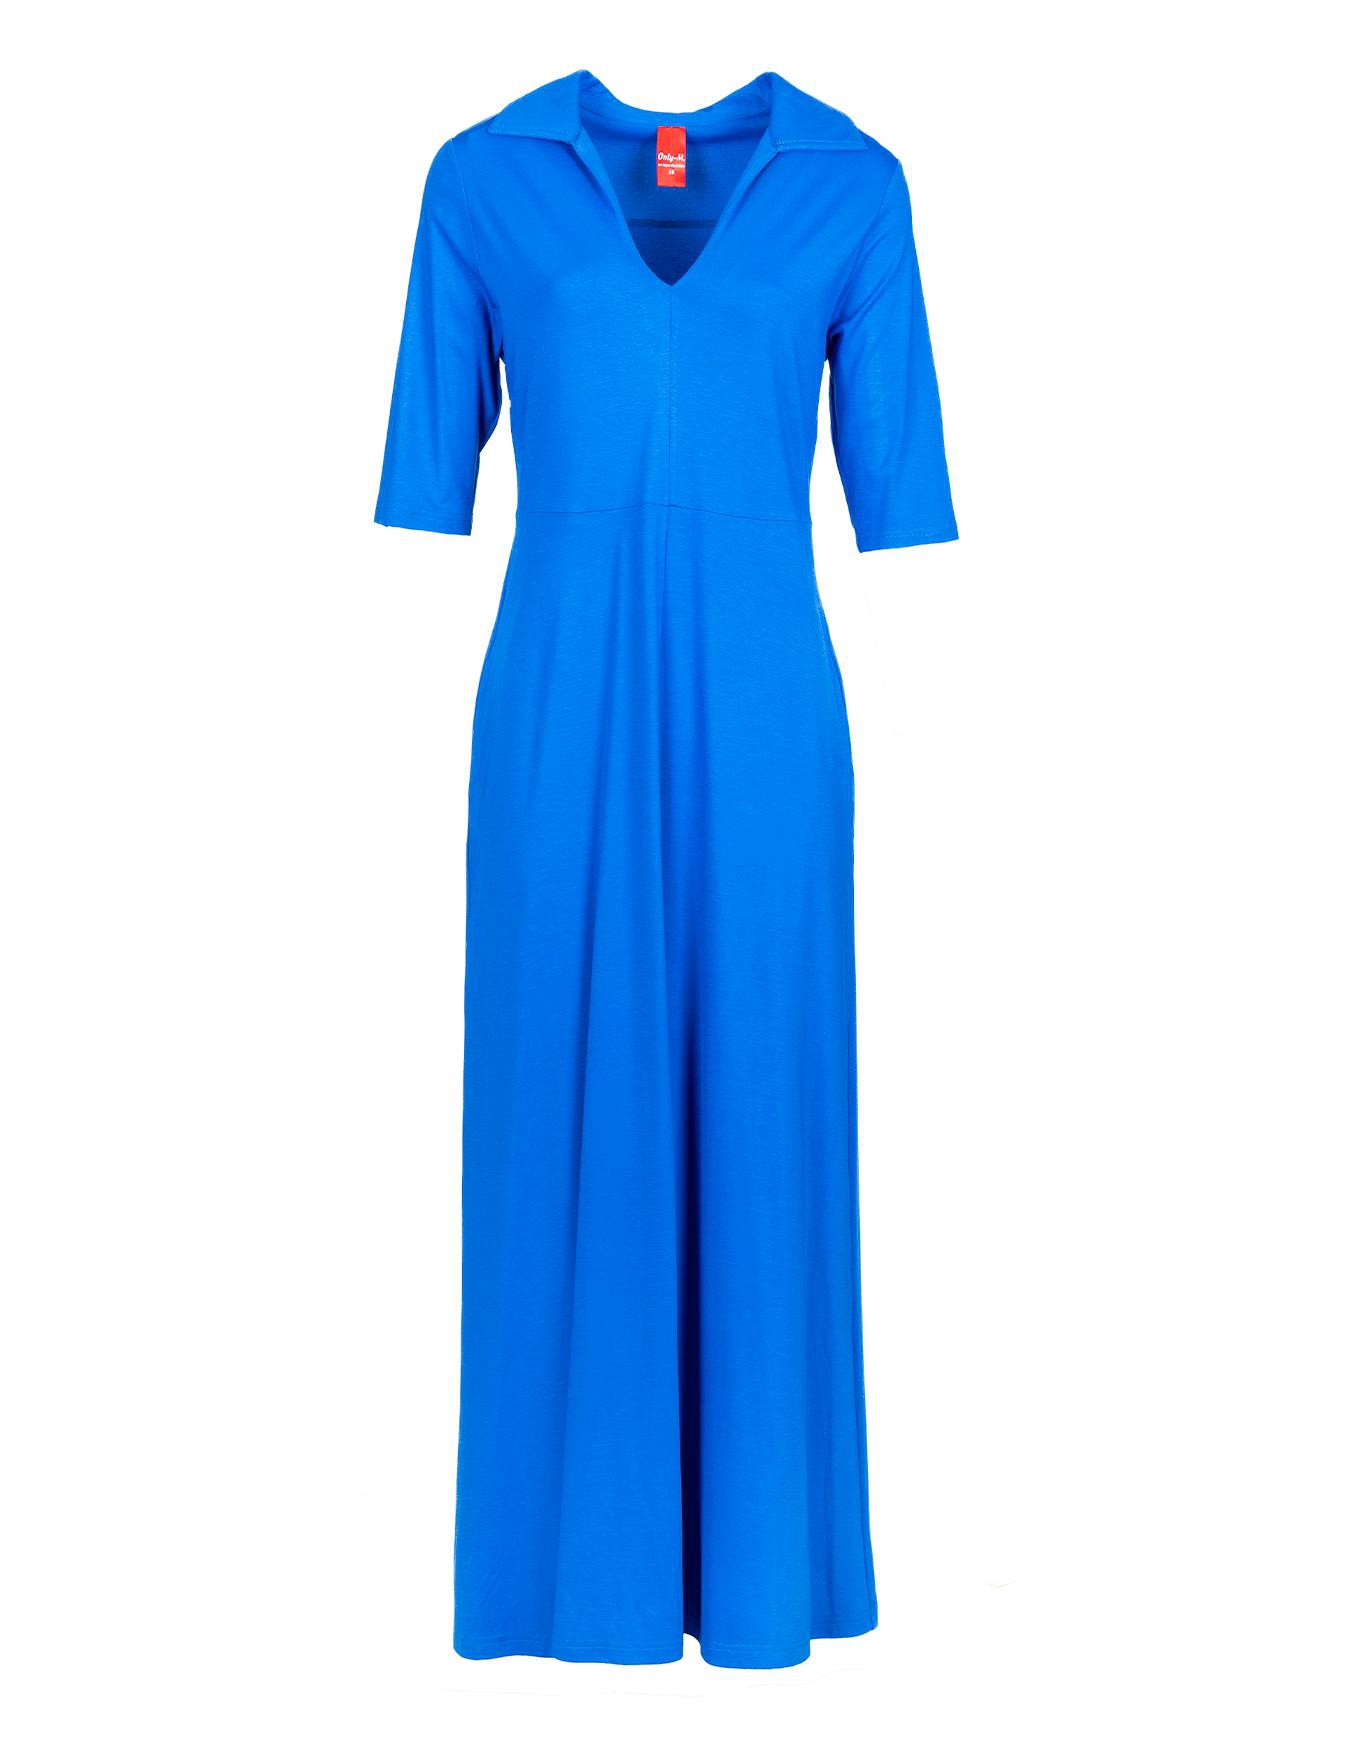 Maxi jurk polokraag kobalt blauw